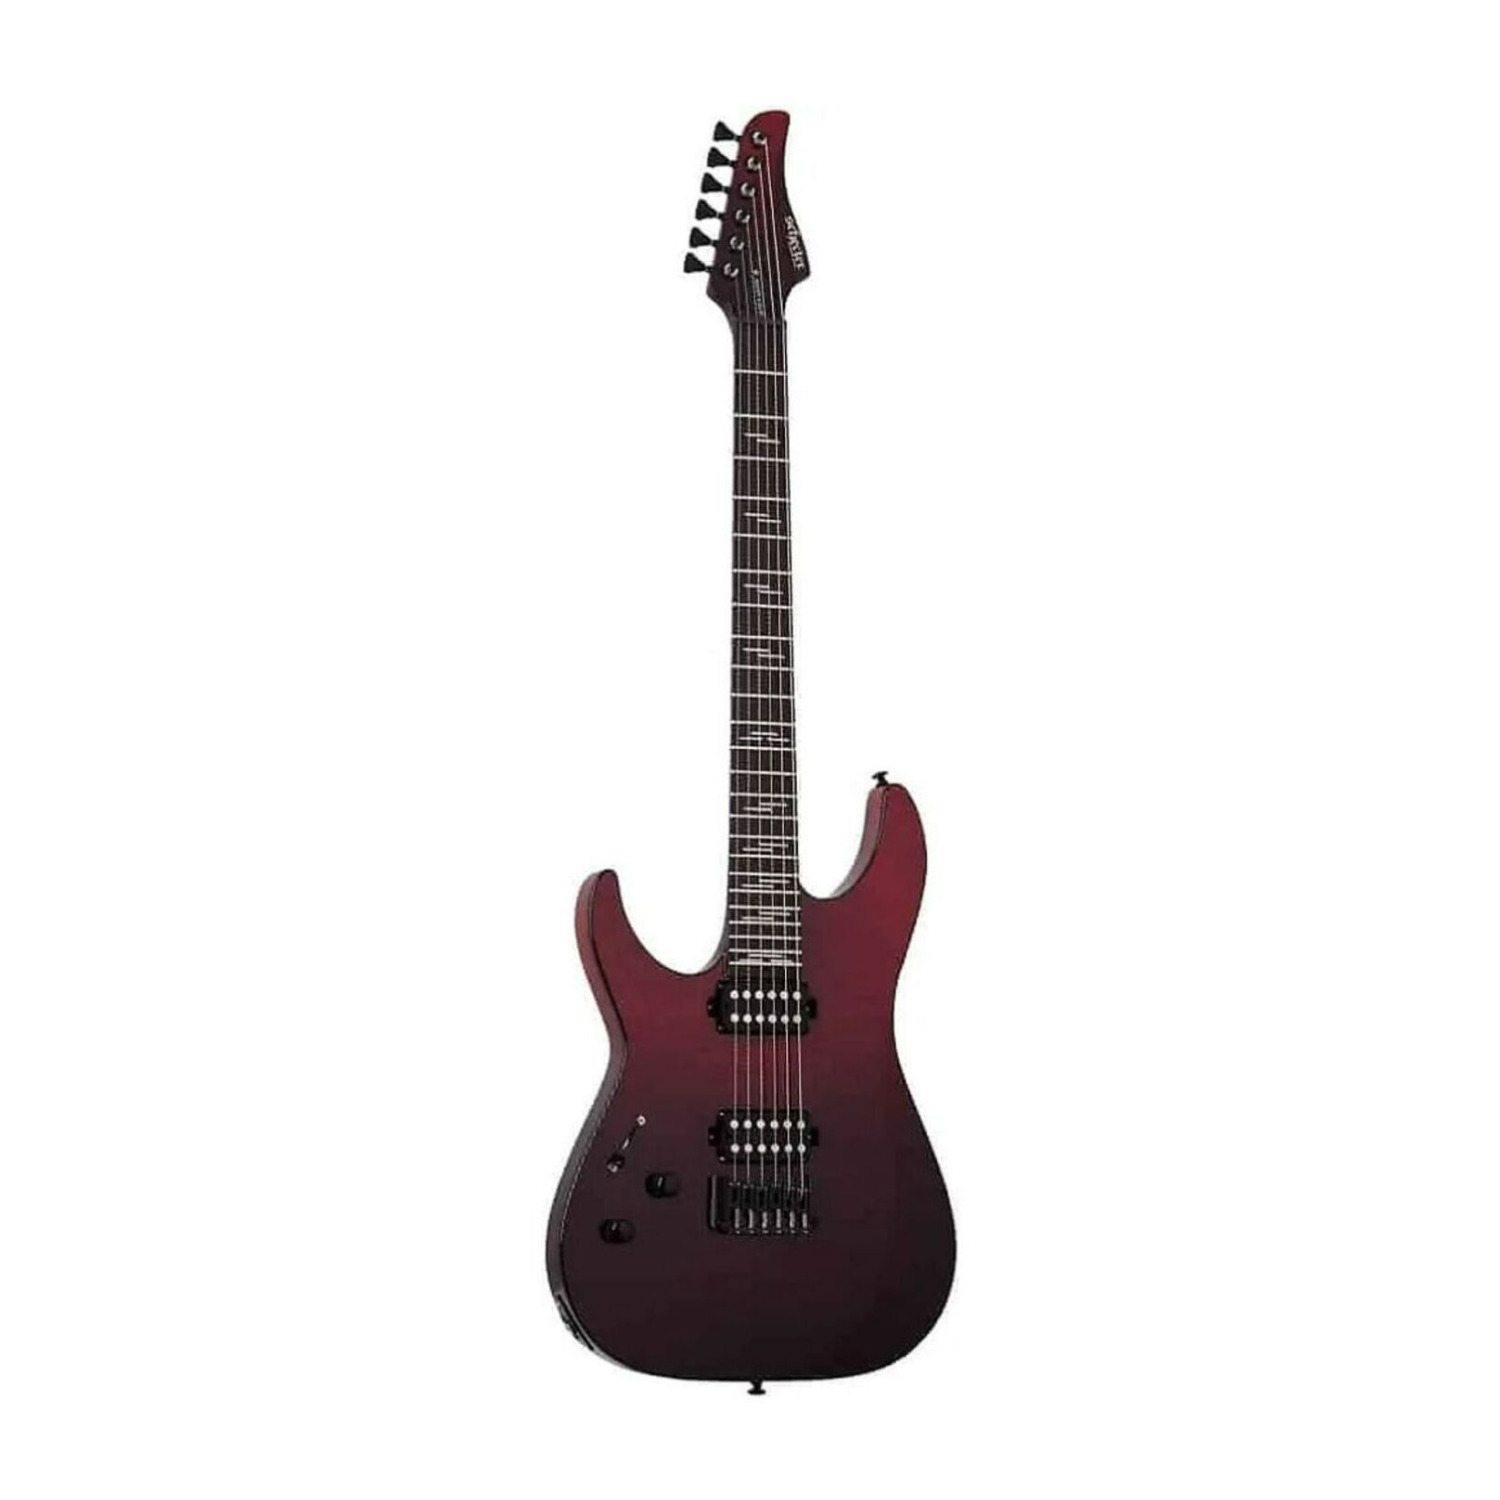 Schecter Reaper-6 LH 6-String Electric Guitar with Ebony Fretboard (Left-Handed, Blood Burst) in Red/Black -  SGR-2183